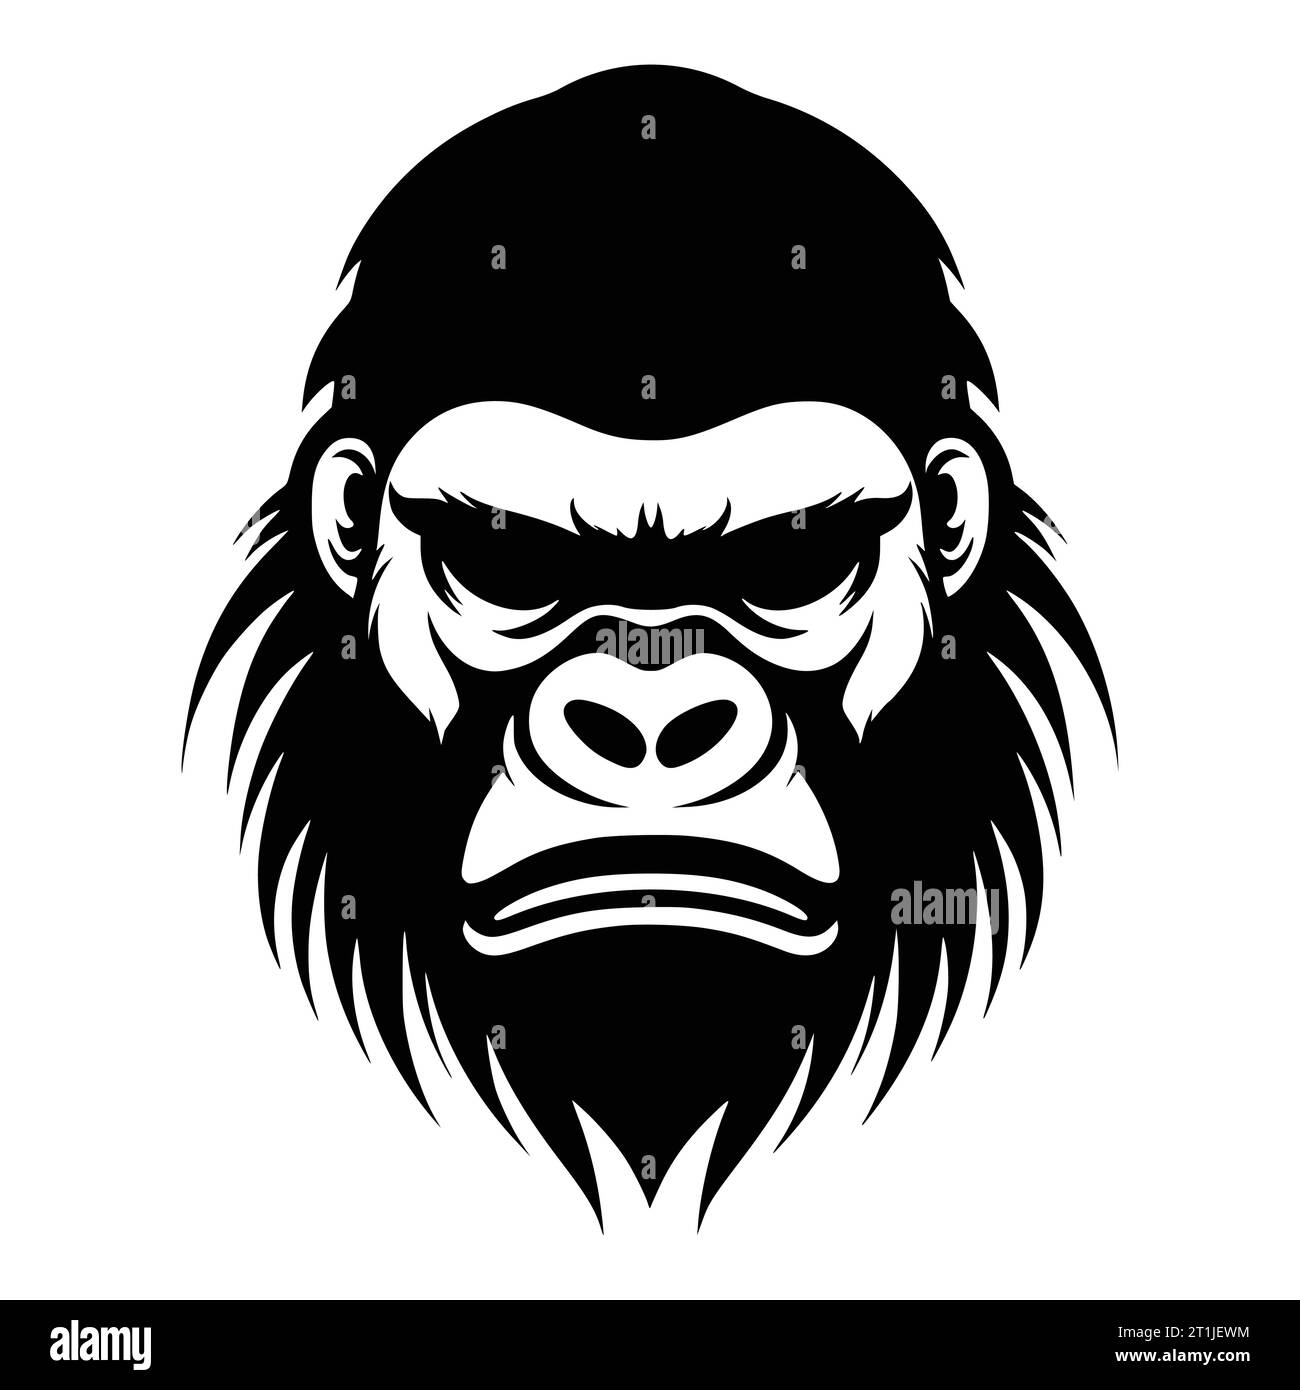 angry gorilla animal head logo and symbol illustration Stock Vector